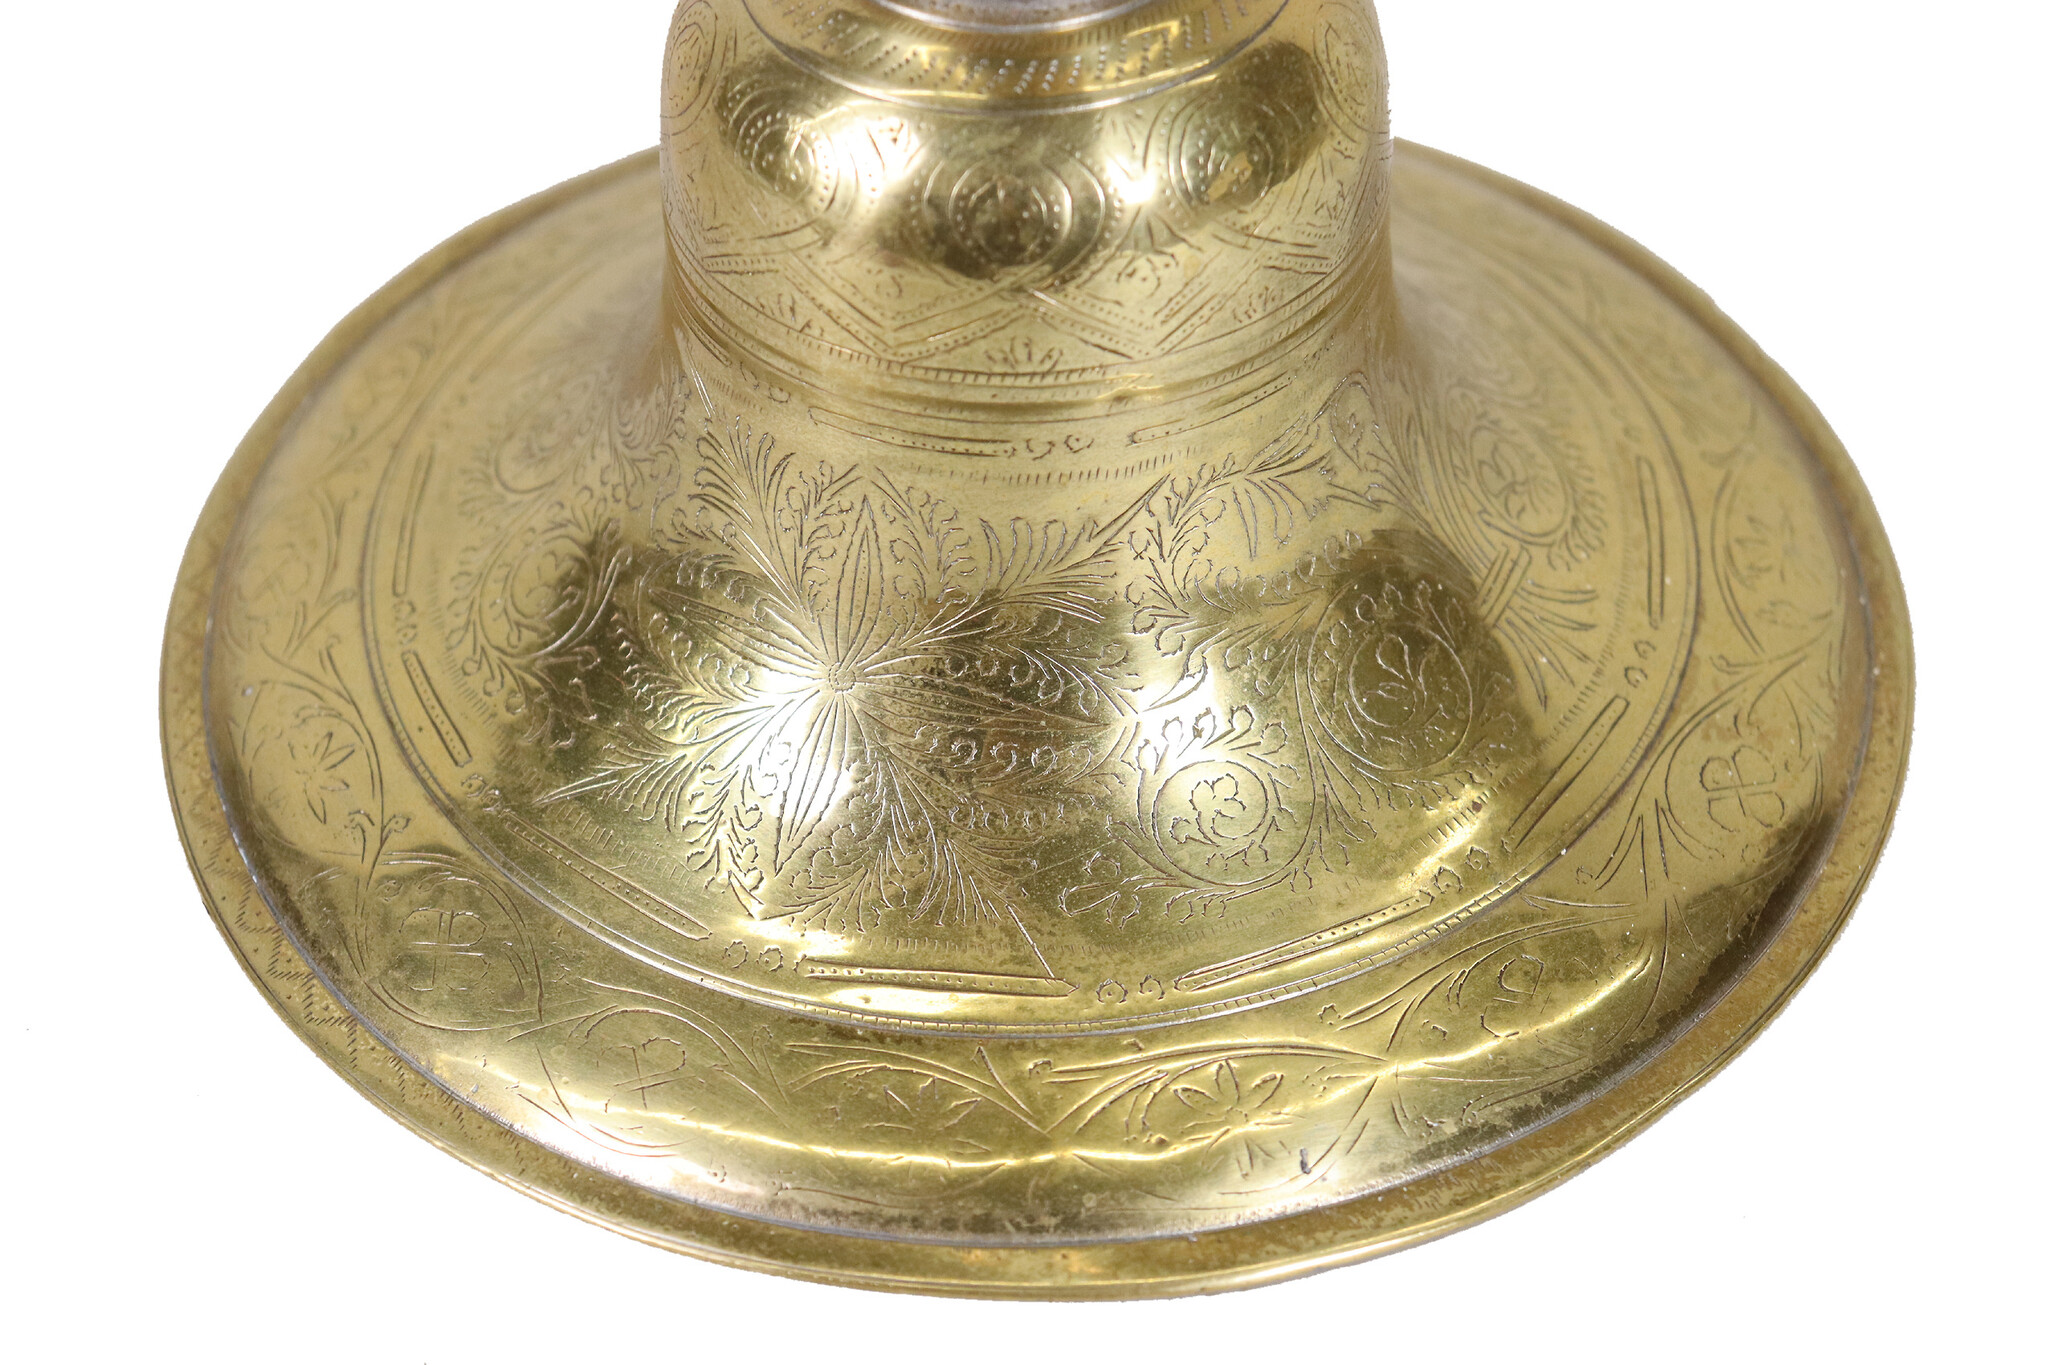 Antique Engraved Brass Hookah Shisha hubble-bubble from india pakistan No:23/M